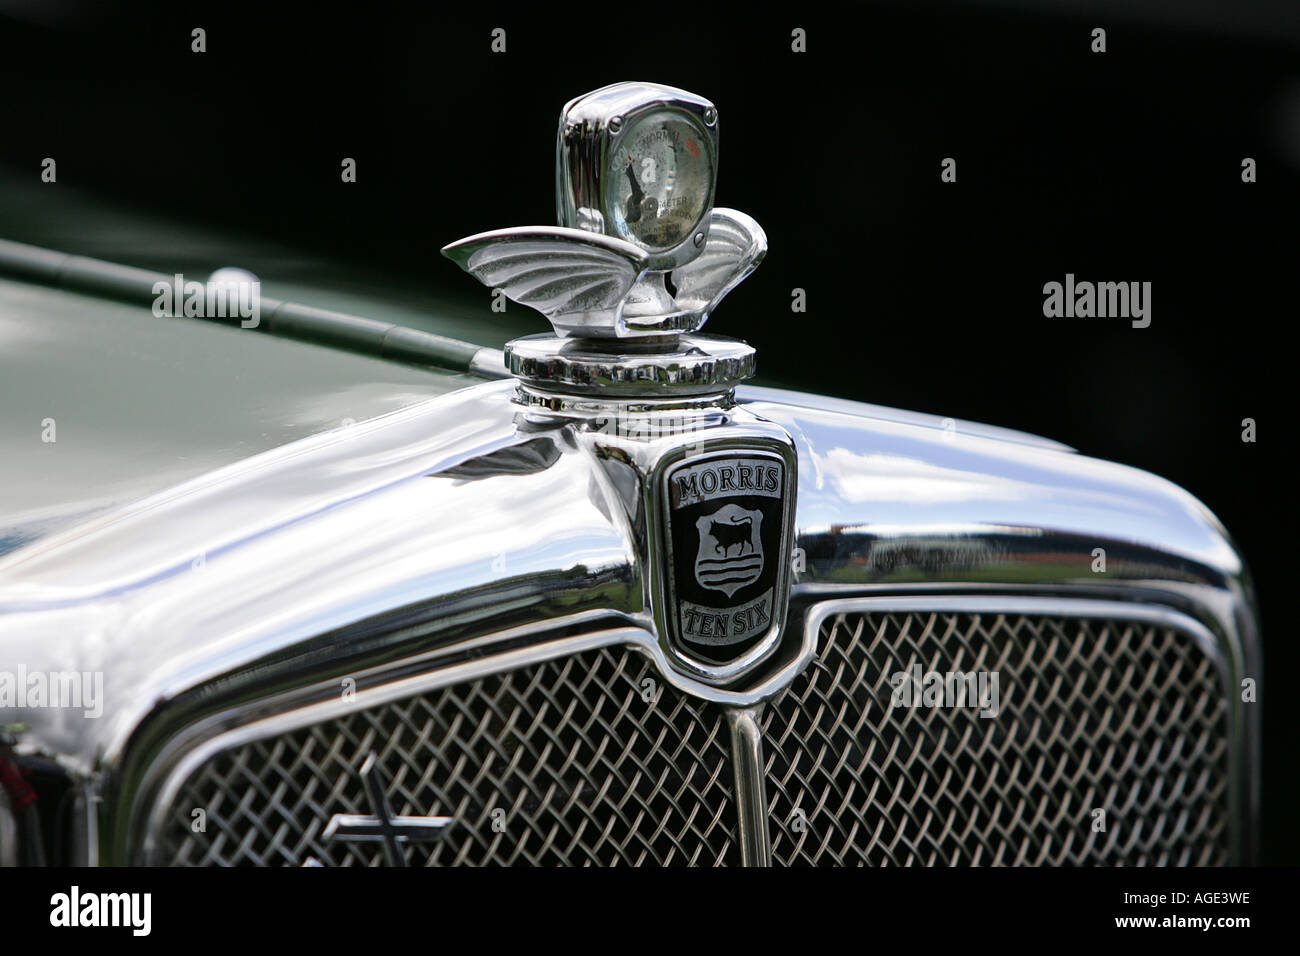 https://c8.alamy.com/comp/AGE3WE/morris-ten-six-logo-thermometer-radiator-classic-car-old-history-vehicle-AGE3WE.jpg